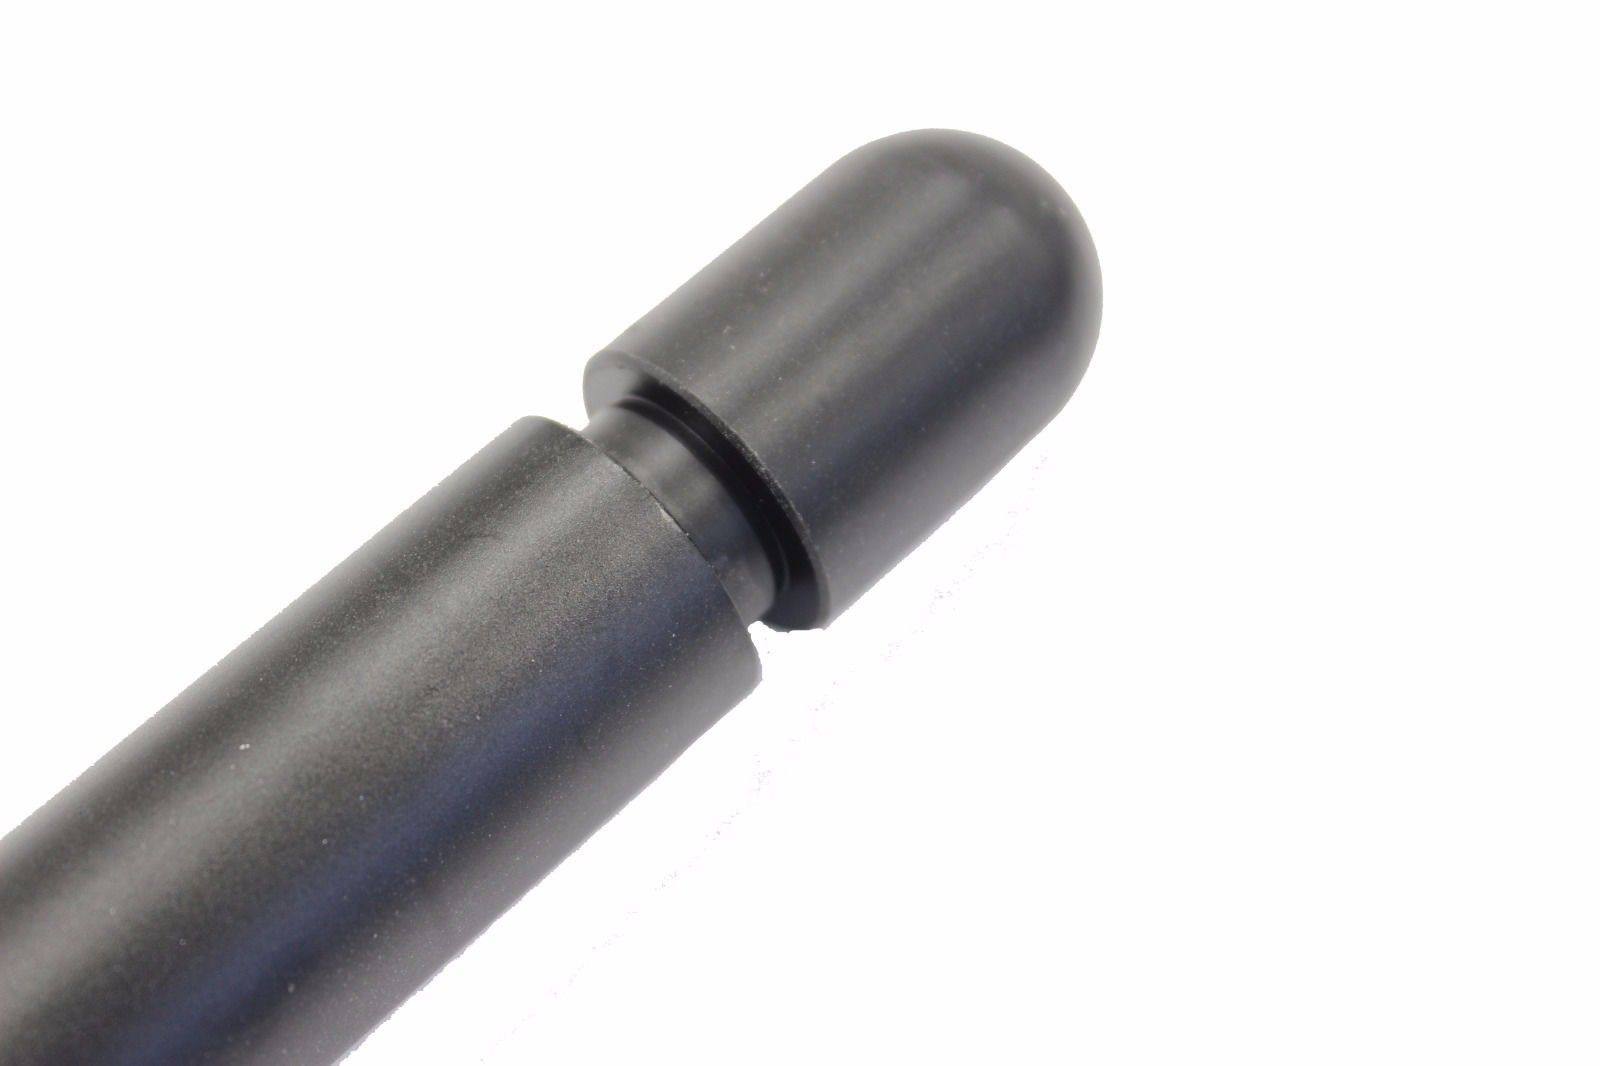 Universal 37mm 22mm Black CNC Fork Clip on Ons clipon Handle Bars set Handlebar - TDRMOTO